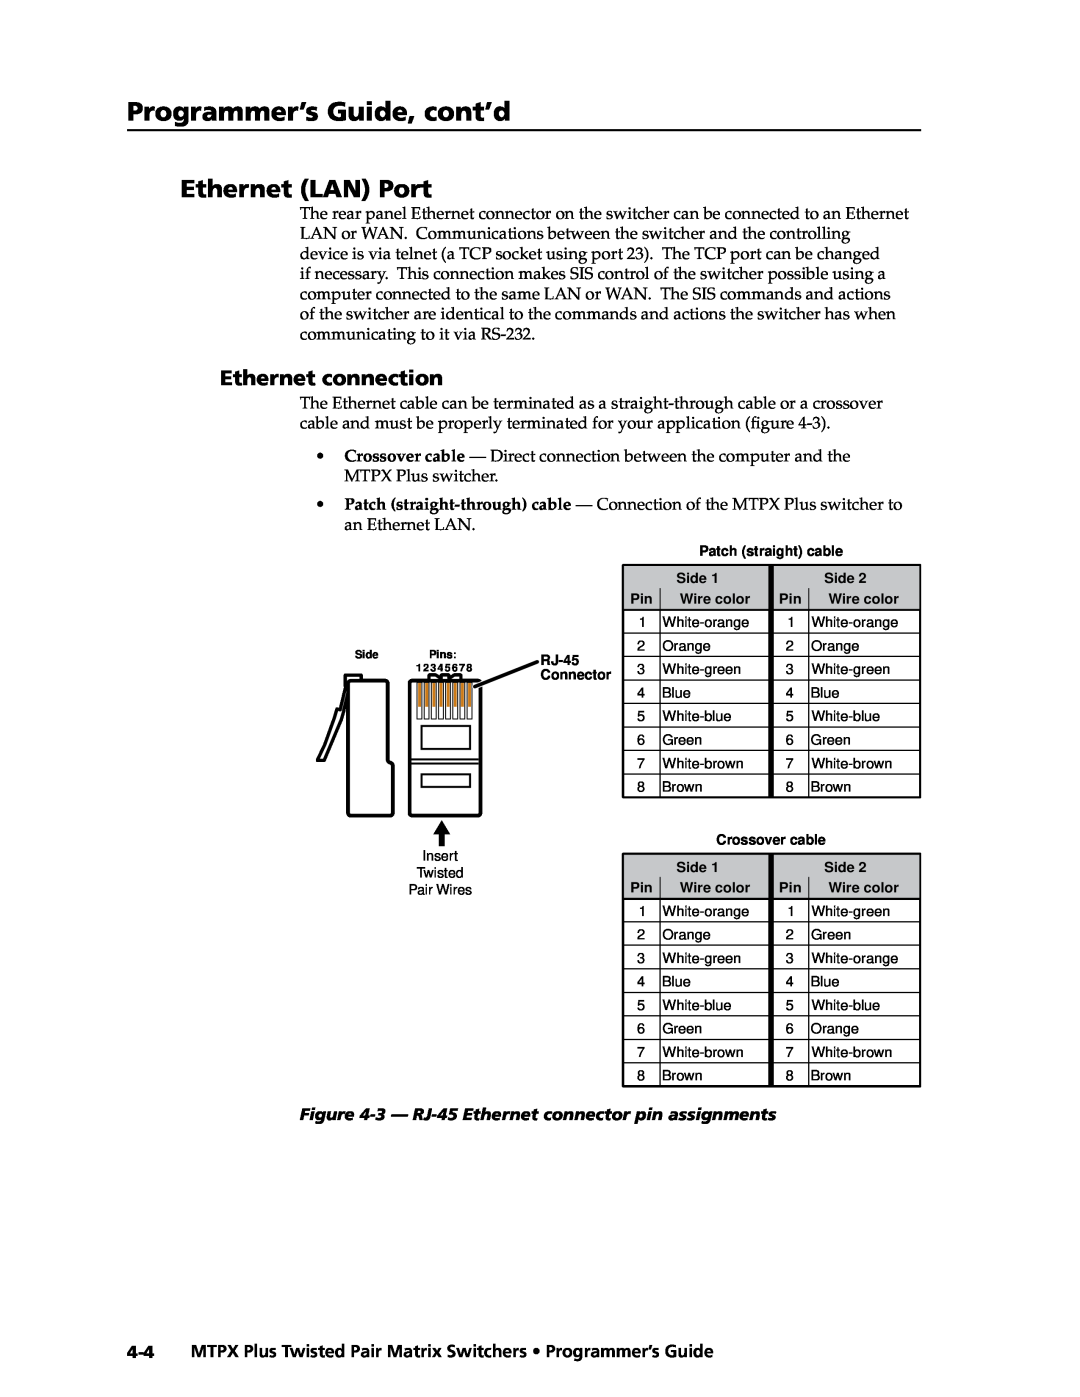 Extron electronic MTPX Plus Series manual Programmer’s Guide, cont’d, Ethernet LAN Port, Ethernet connection 